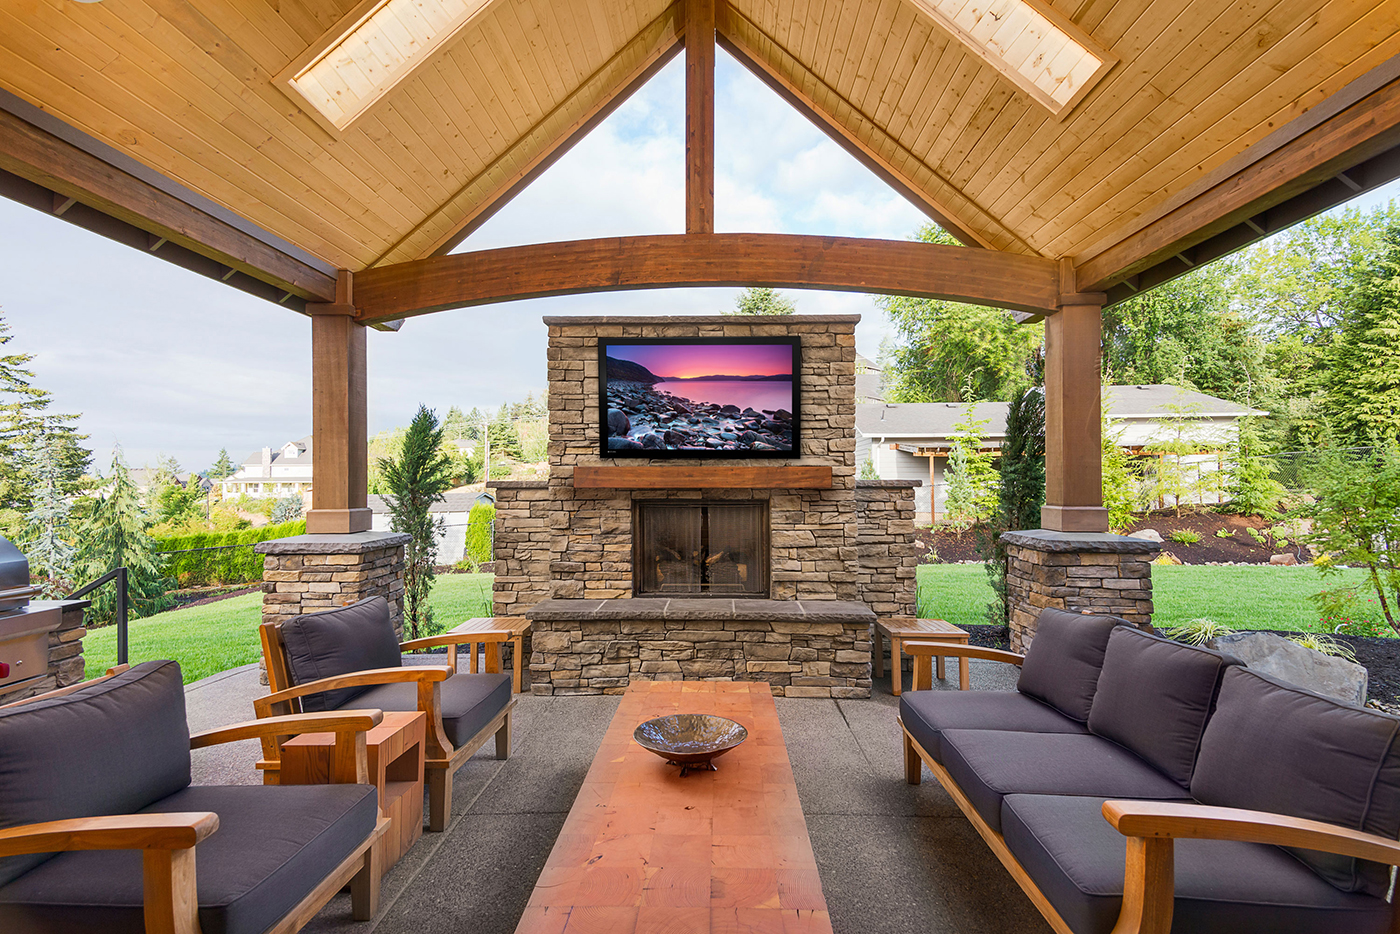 High-end outdoor TVs